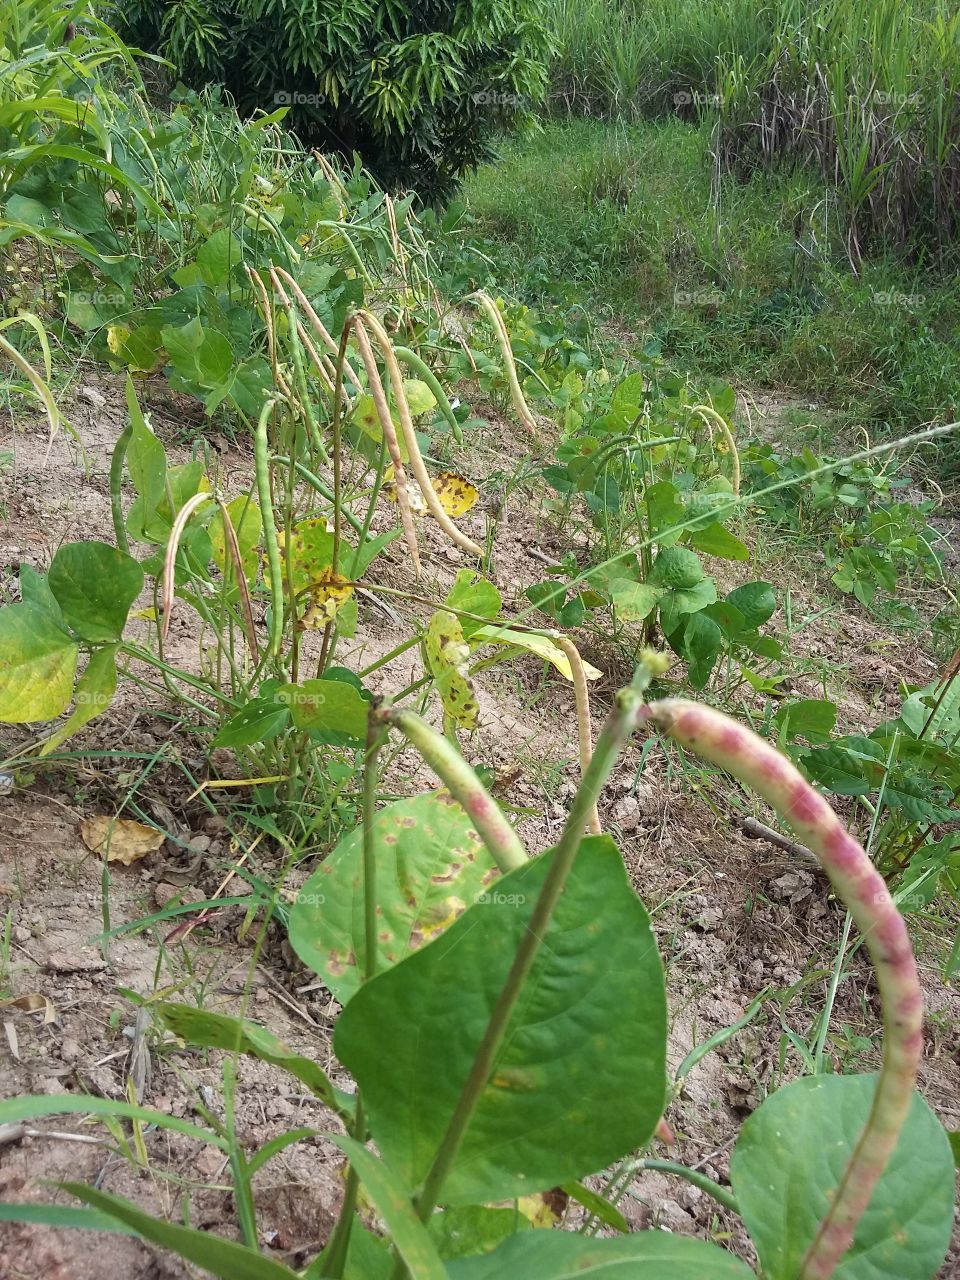 Bean plantation in Ipojuca, Pernambuco, Brazil.